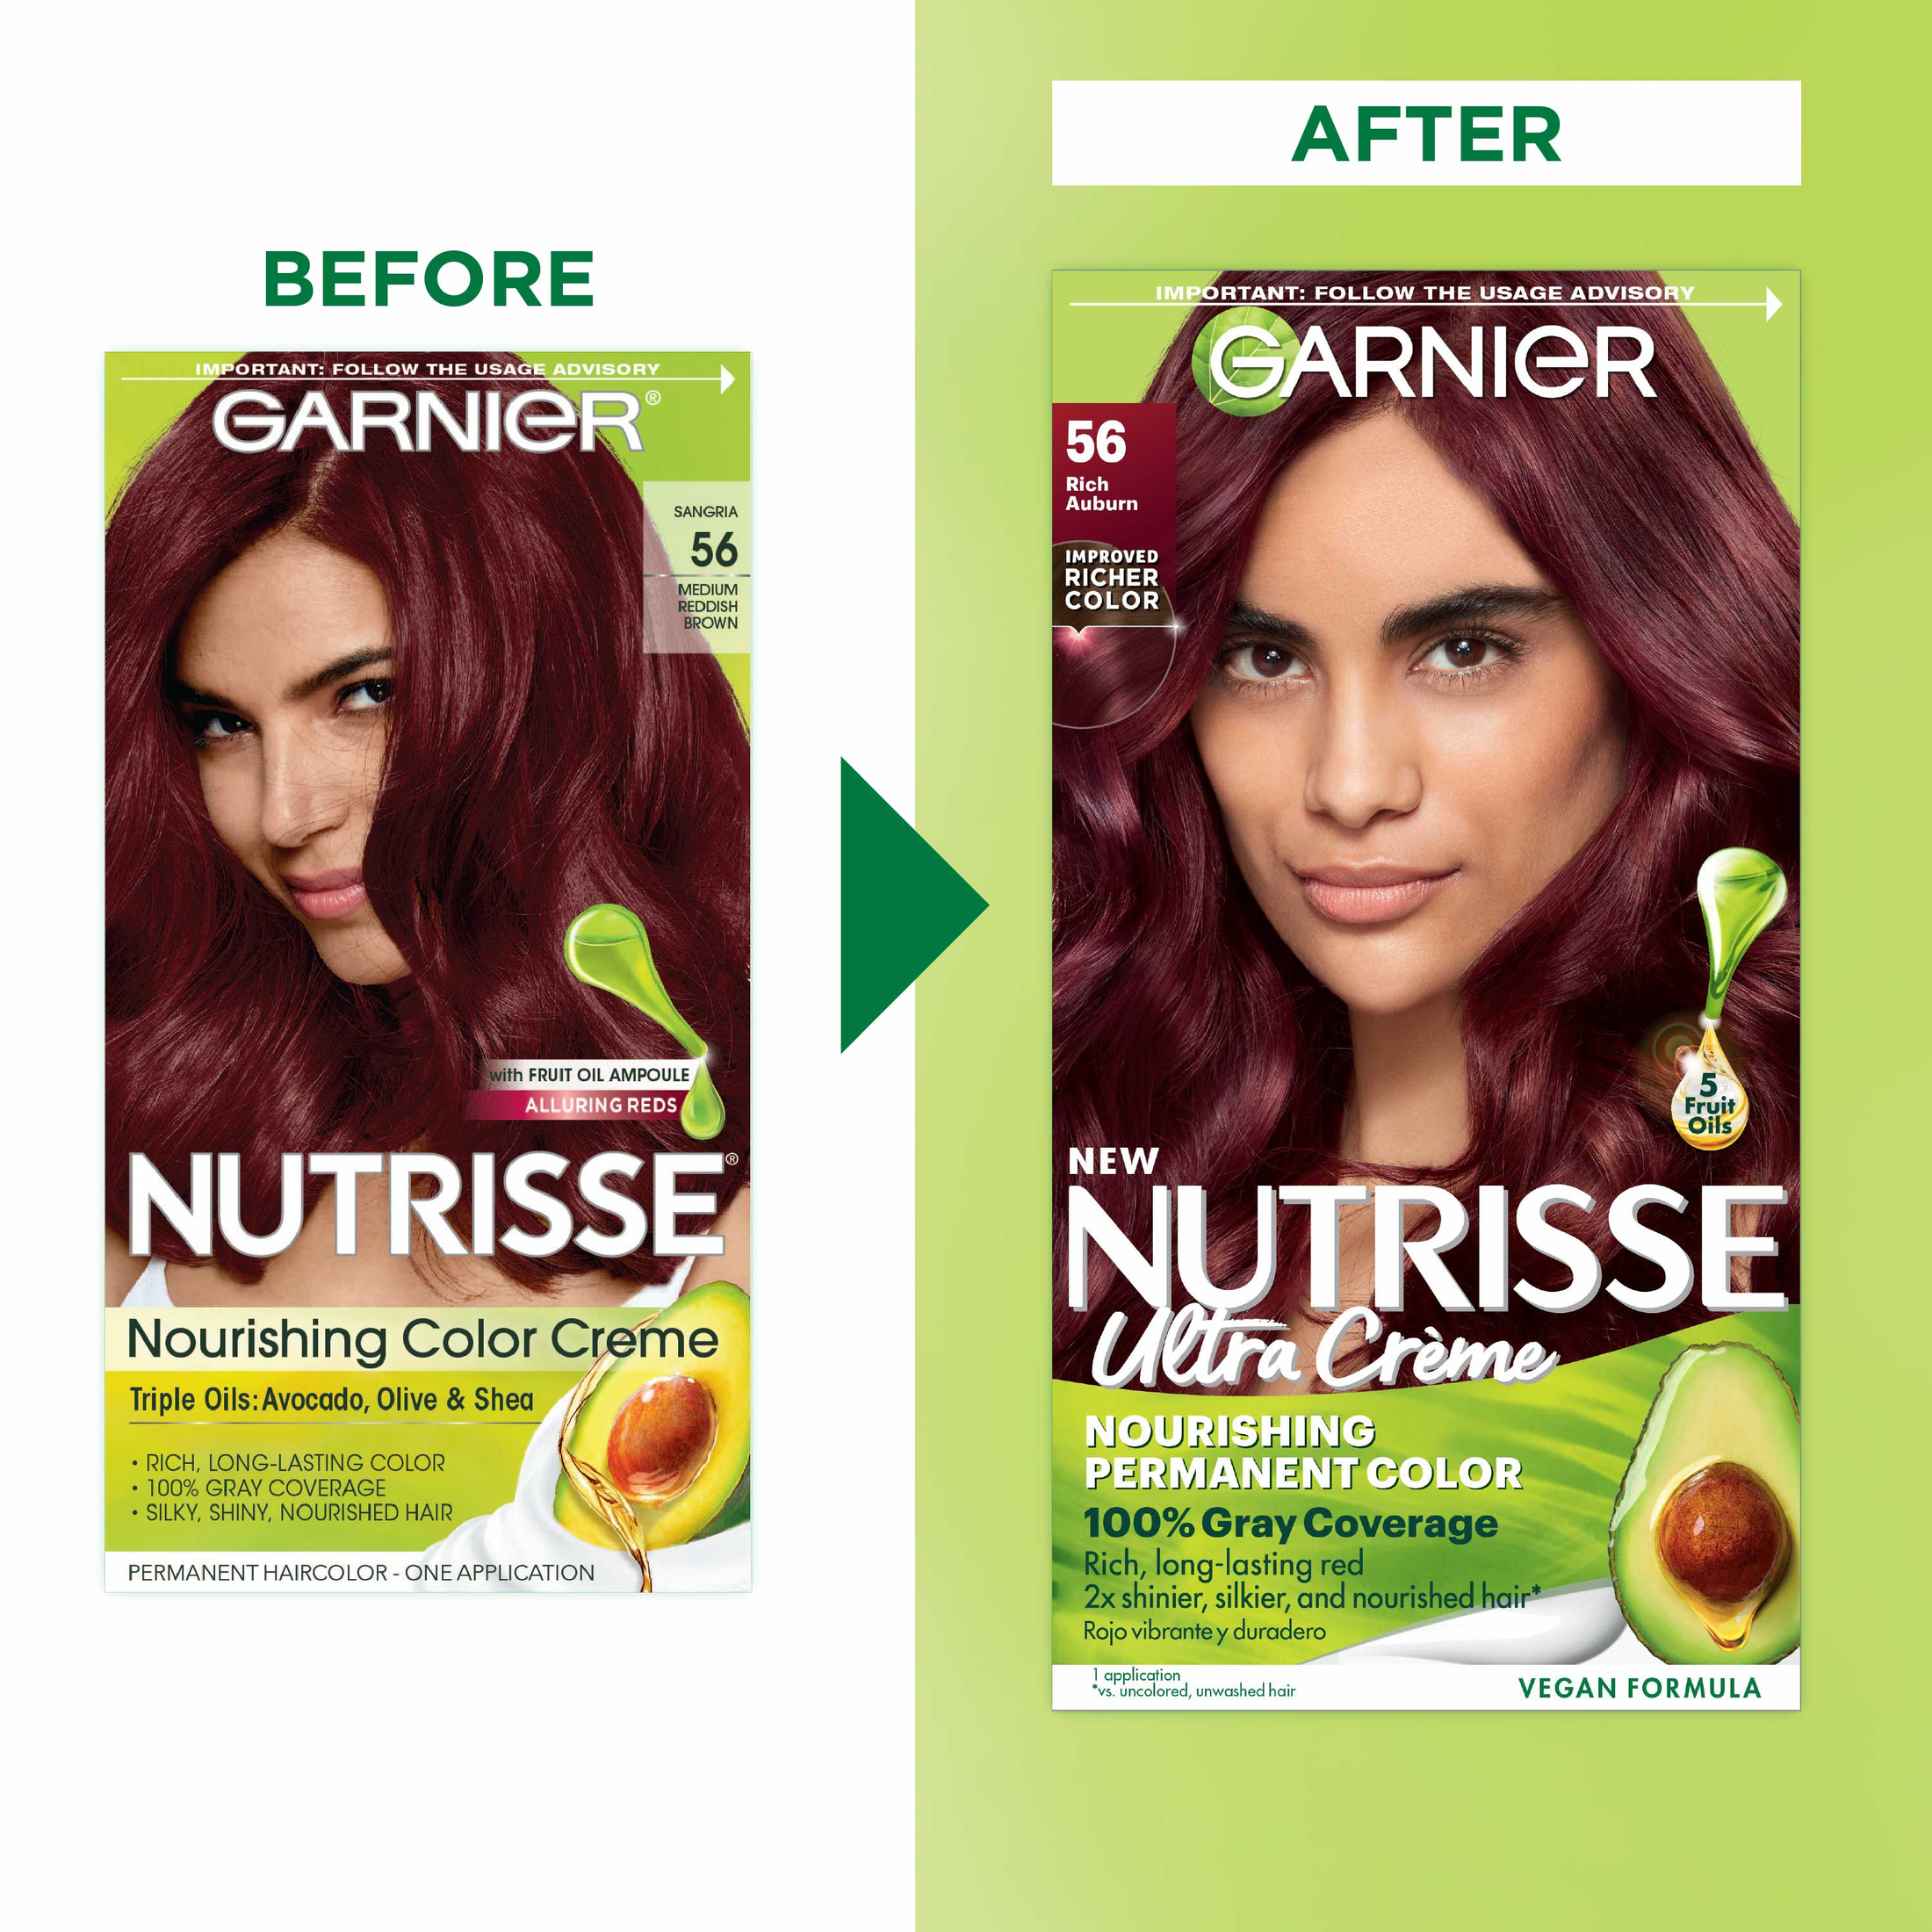 Garnier Nutrisse Nourishing Hair Color Creme, 56 Medium Reddish Brown - image 3 of 11